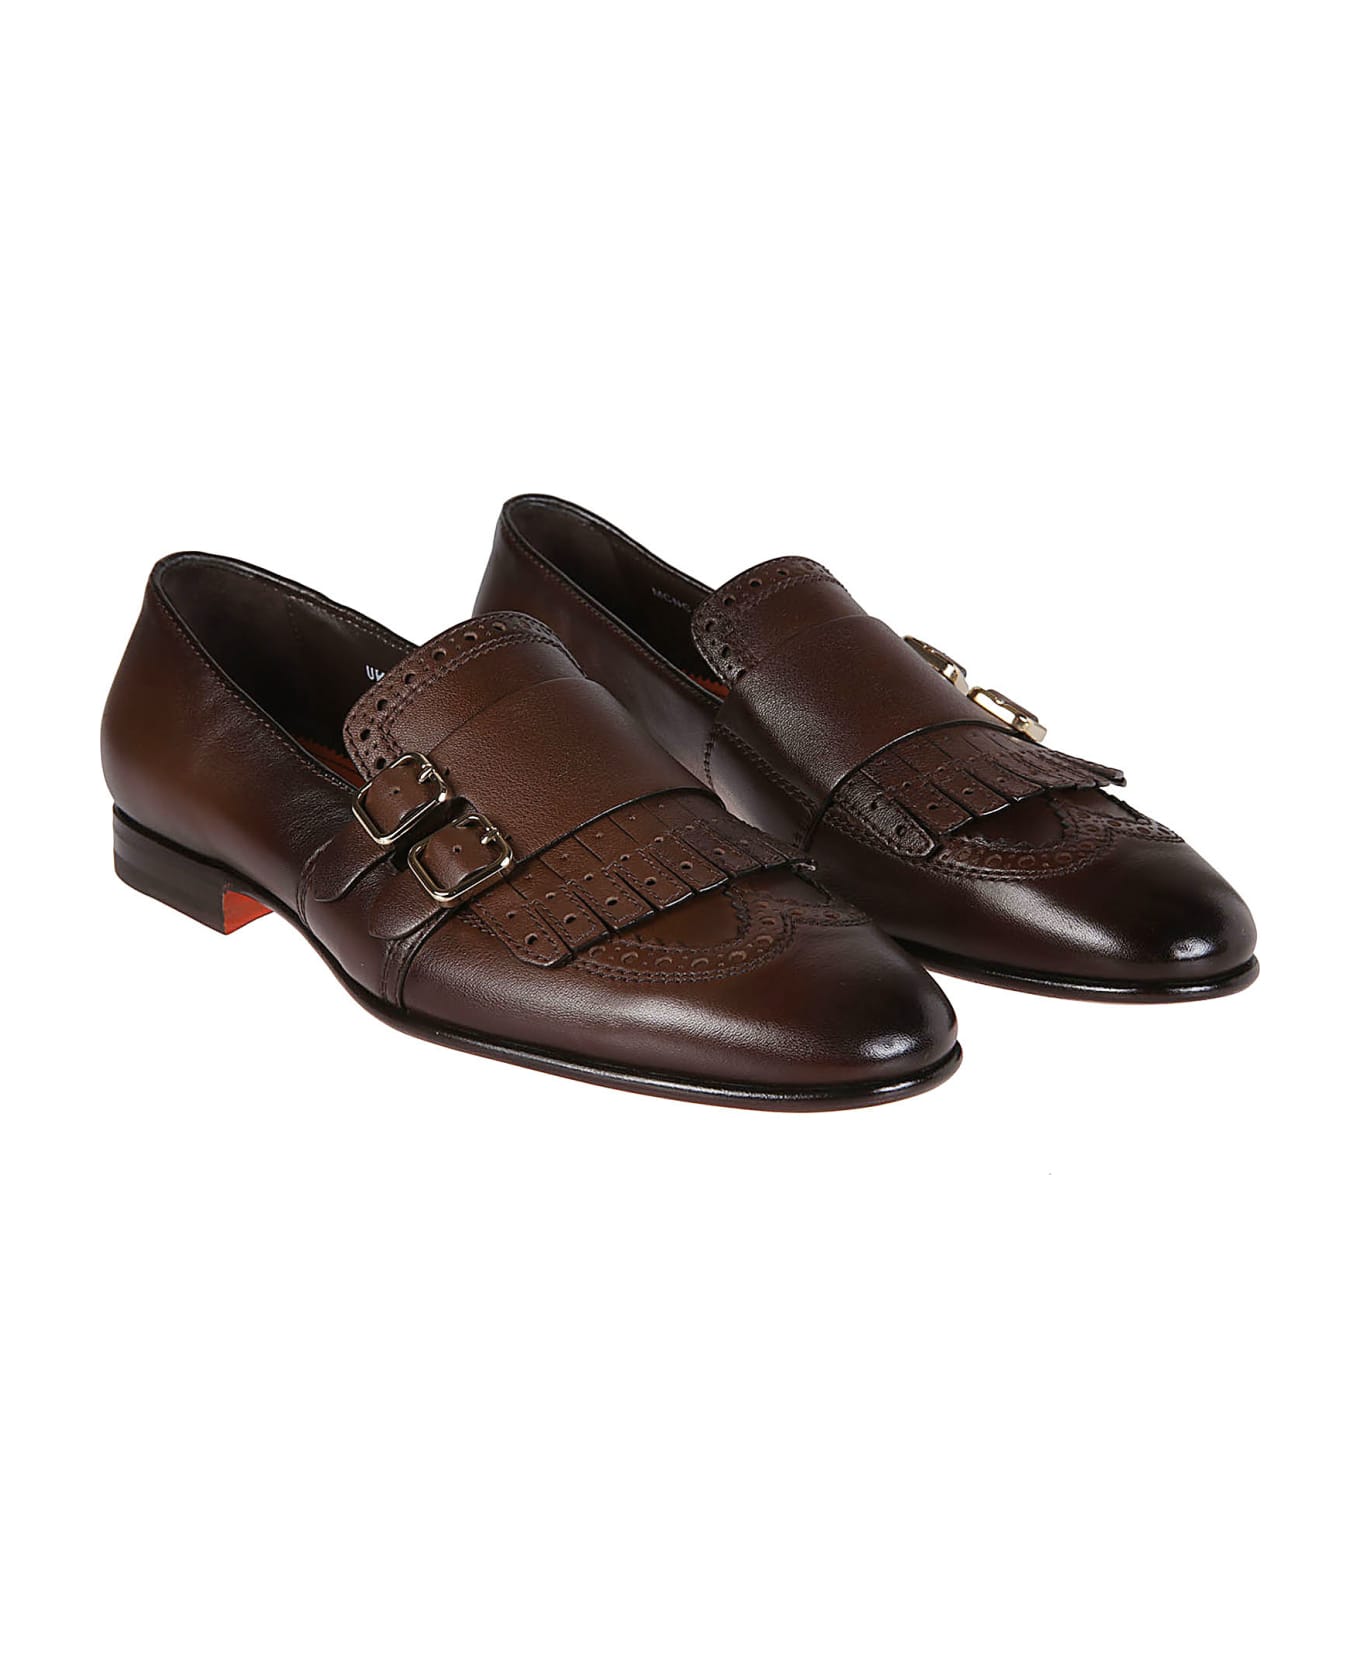 Santoni Double Monks Strap Shoes - Dark Brown